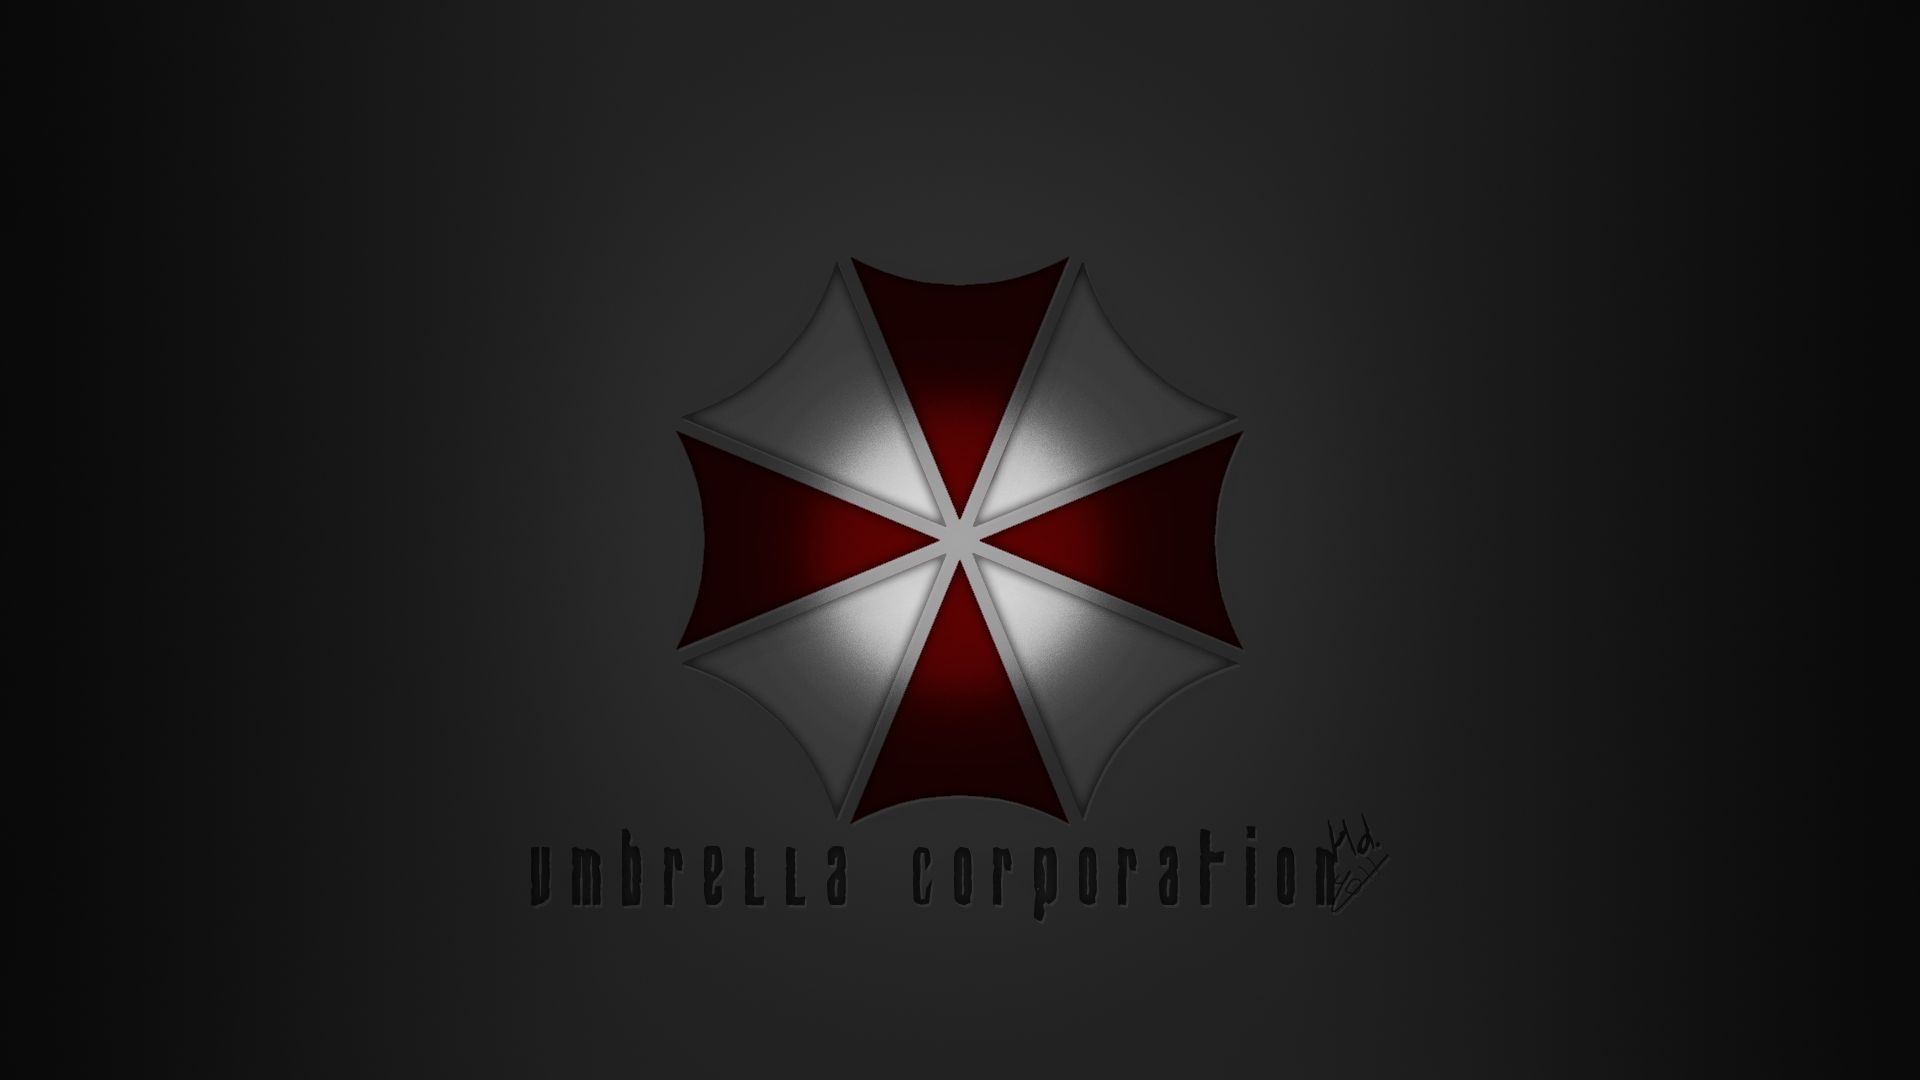 Astounding Umbrella Corporation Wallpaper 1920x1080PX Umbrella